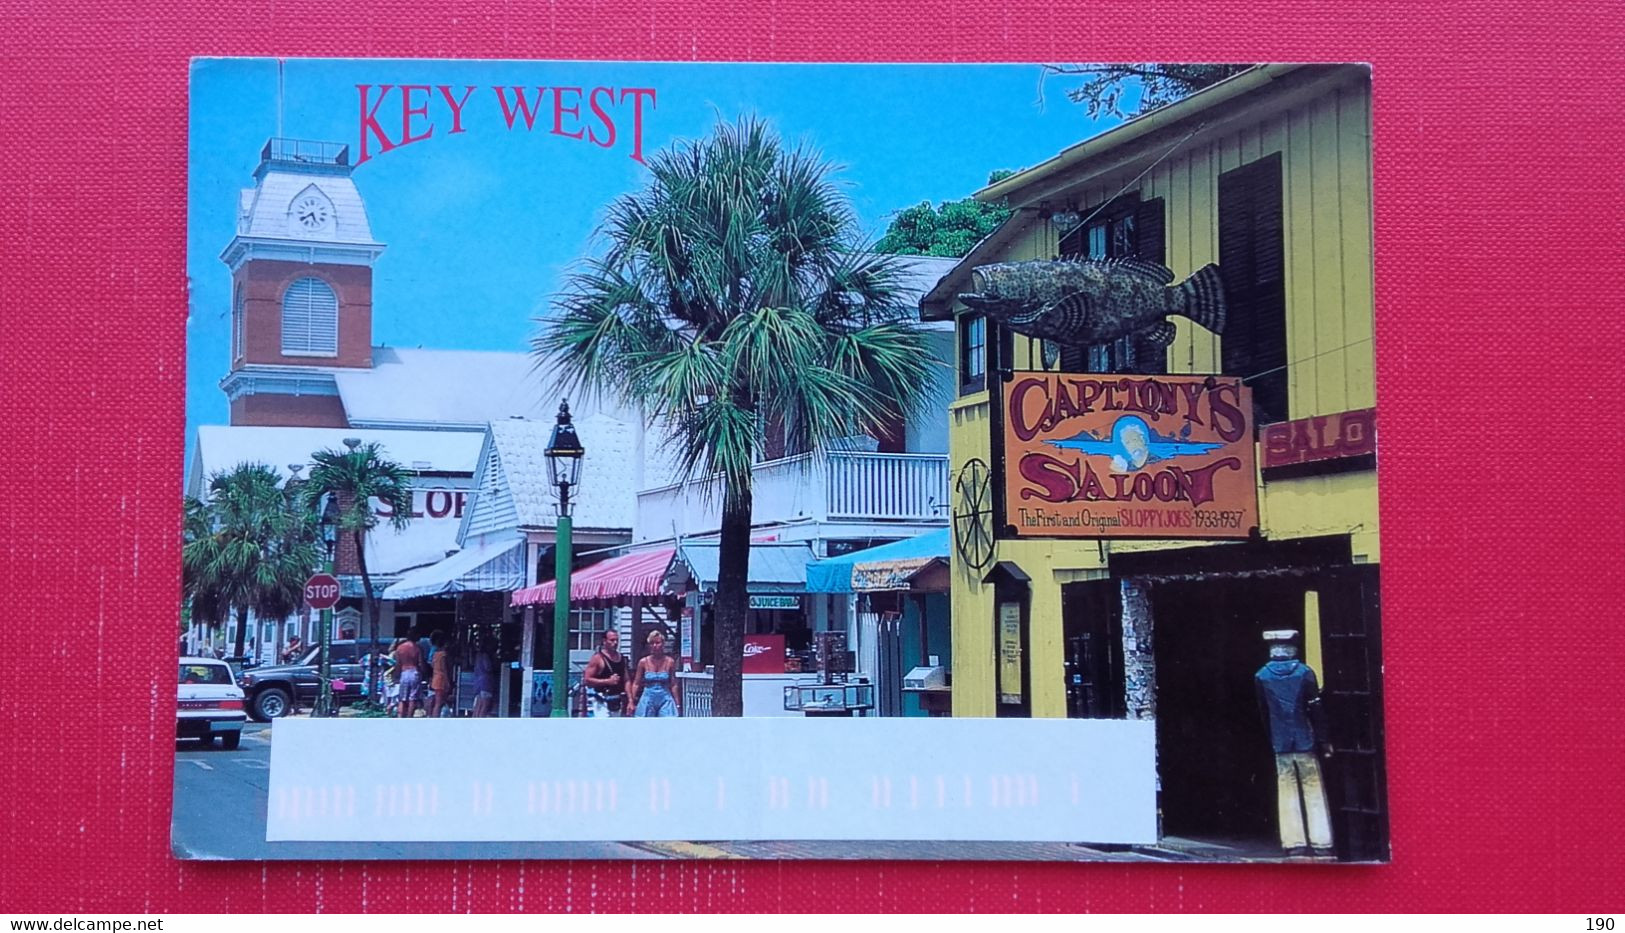 Key West - Key West & The Keys